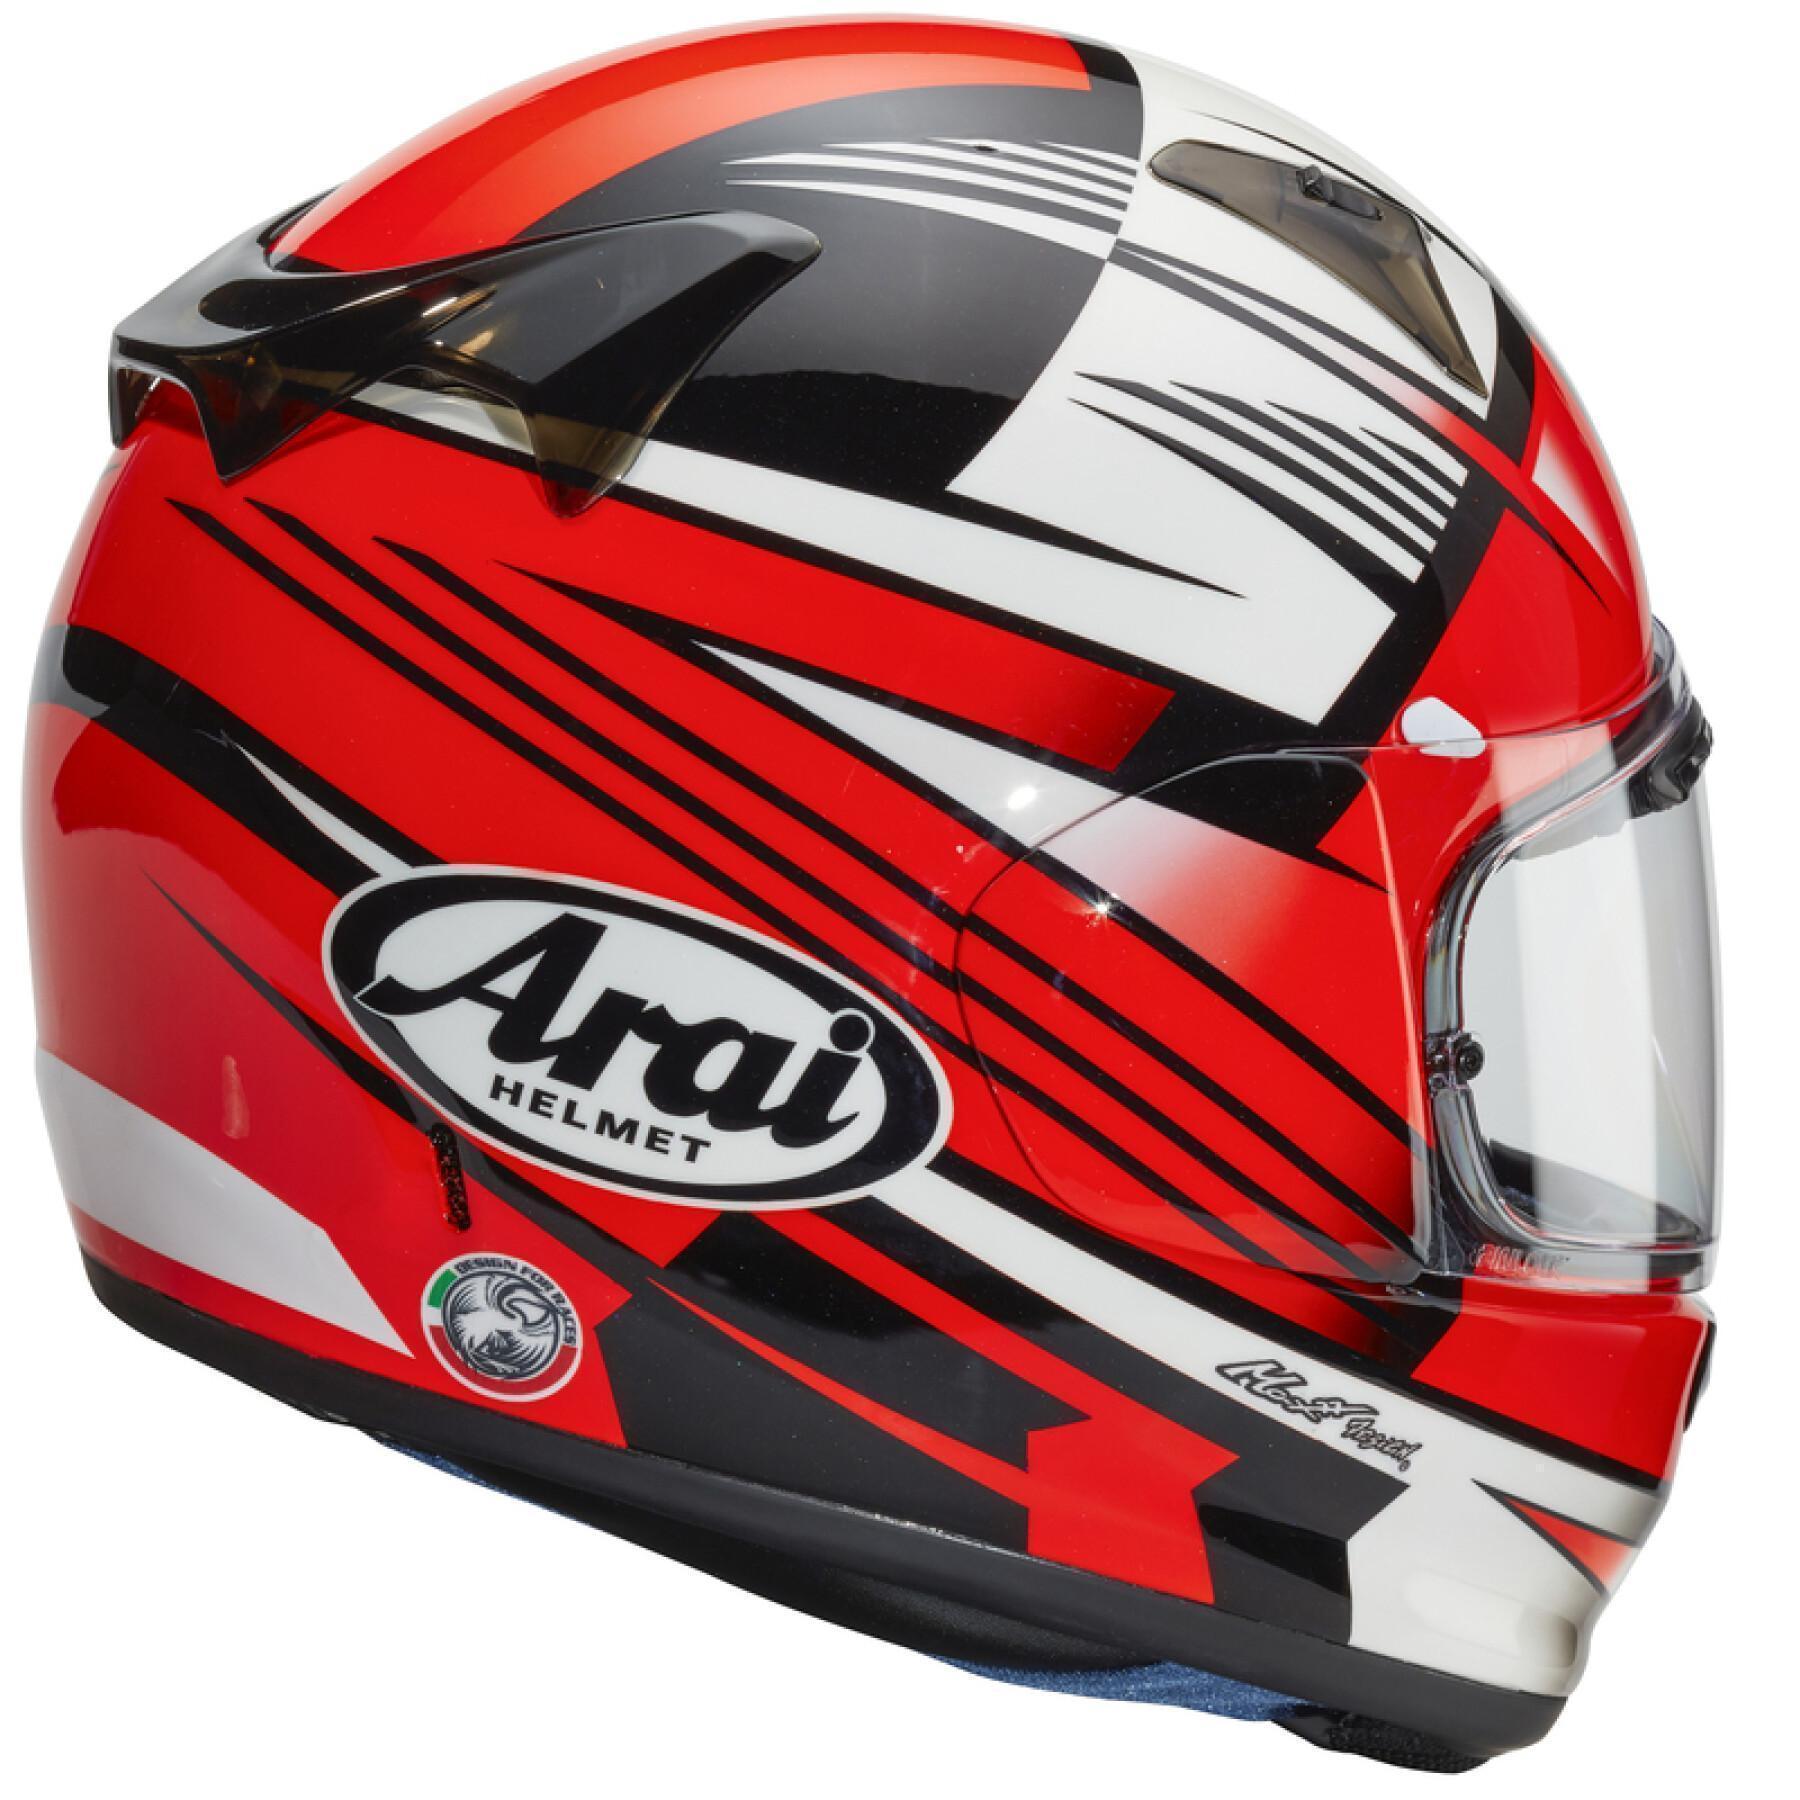 Full face motorcycle helmet Arai Profile-V